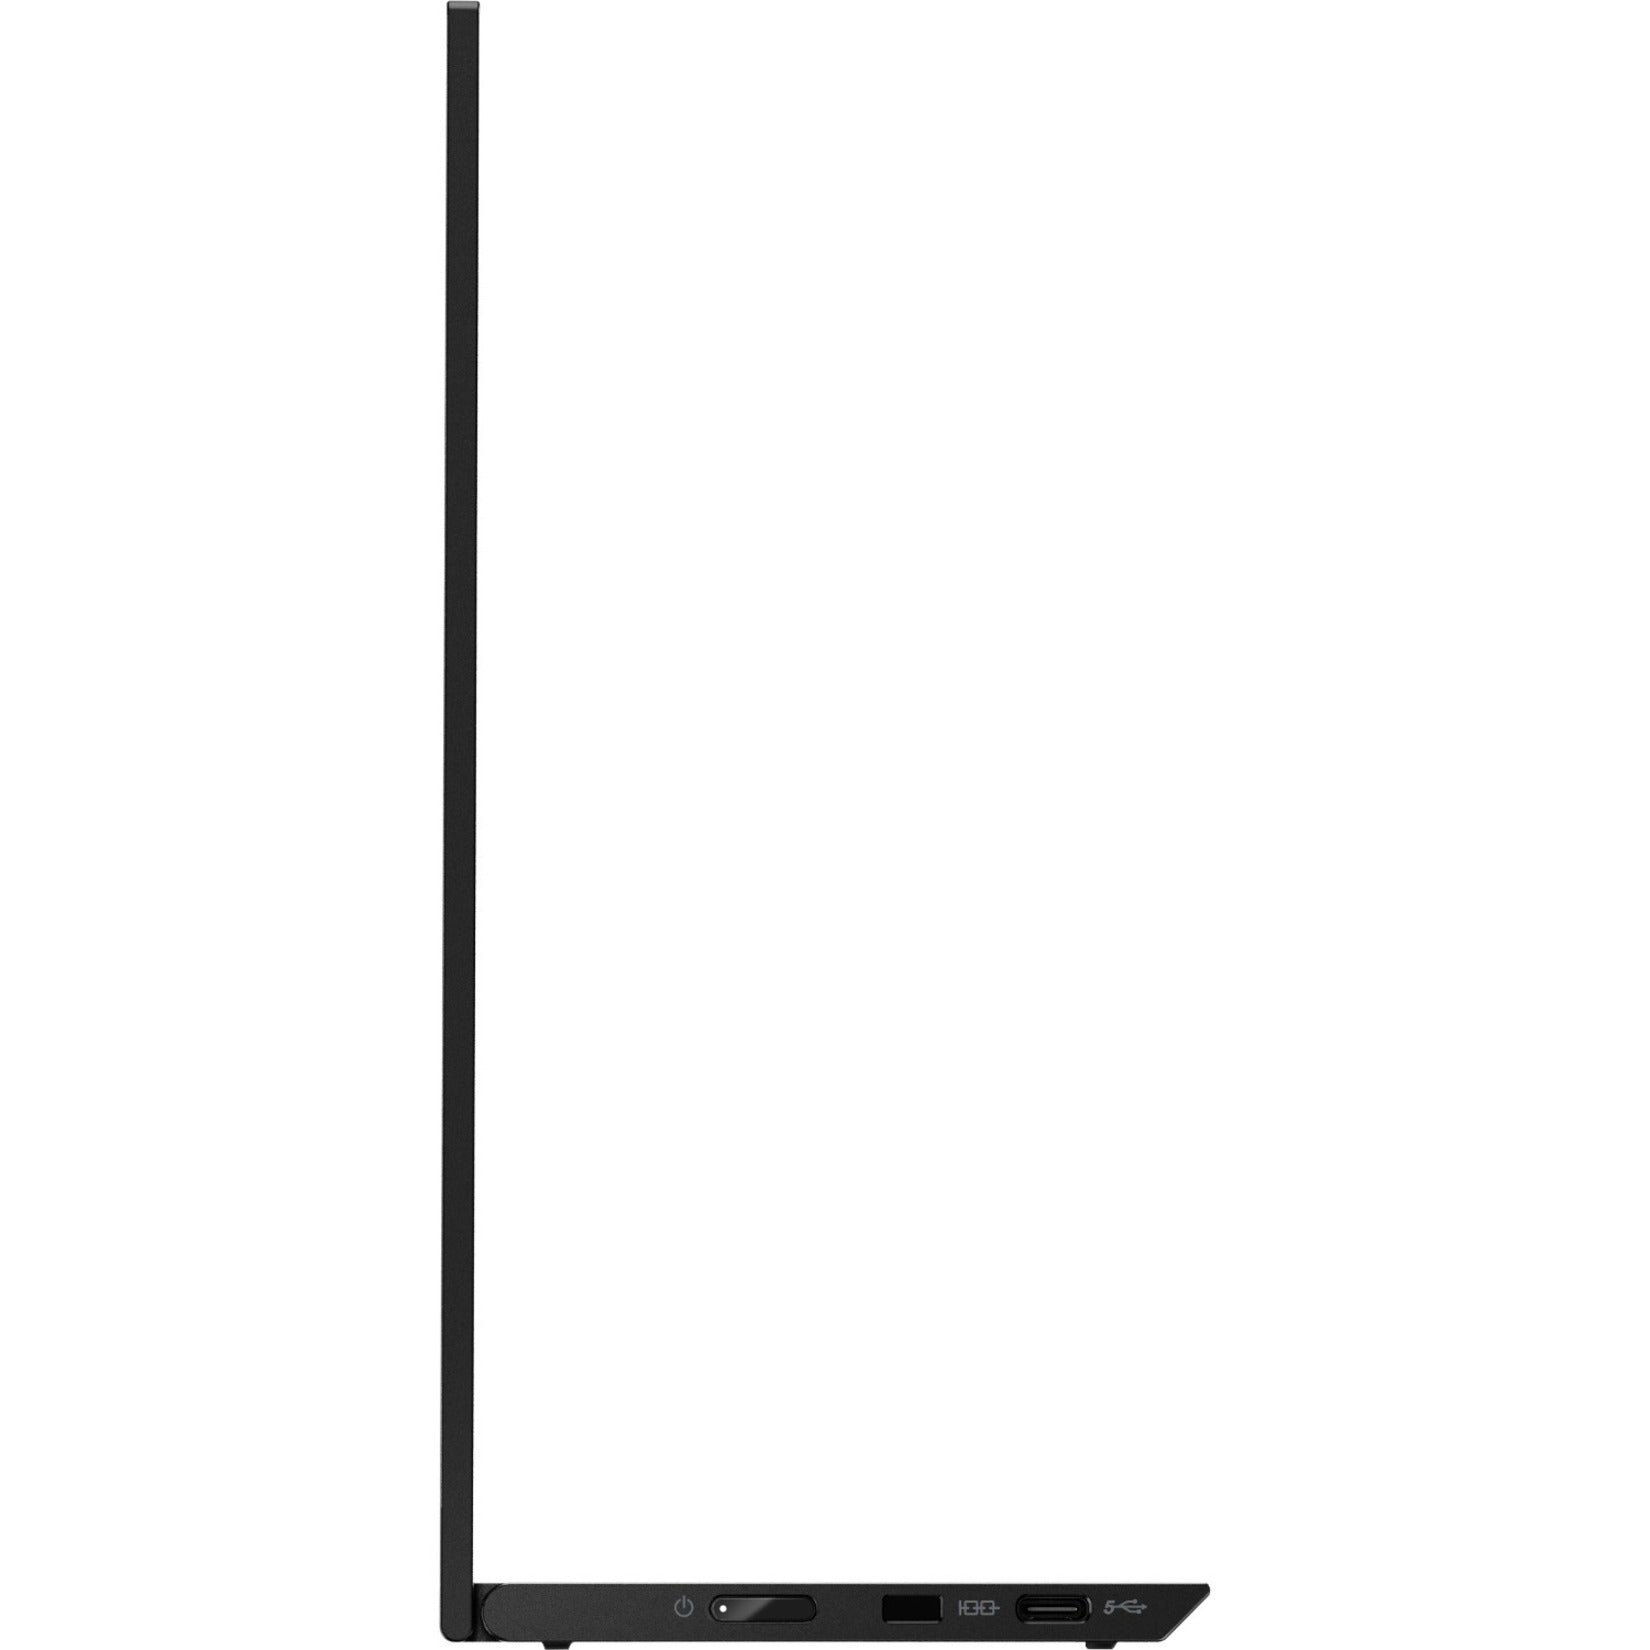 Lenovo 61DDUAR6US ThinkVision M14 USB-C Mobile Monitor, 14" Full HD, 300 Nit, 72% NTSC, 16.7 Million Colors, 1920 x 1080, 700:1, 60 Hz, 3,000,000:1, 3 Year Warranty